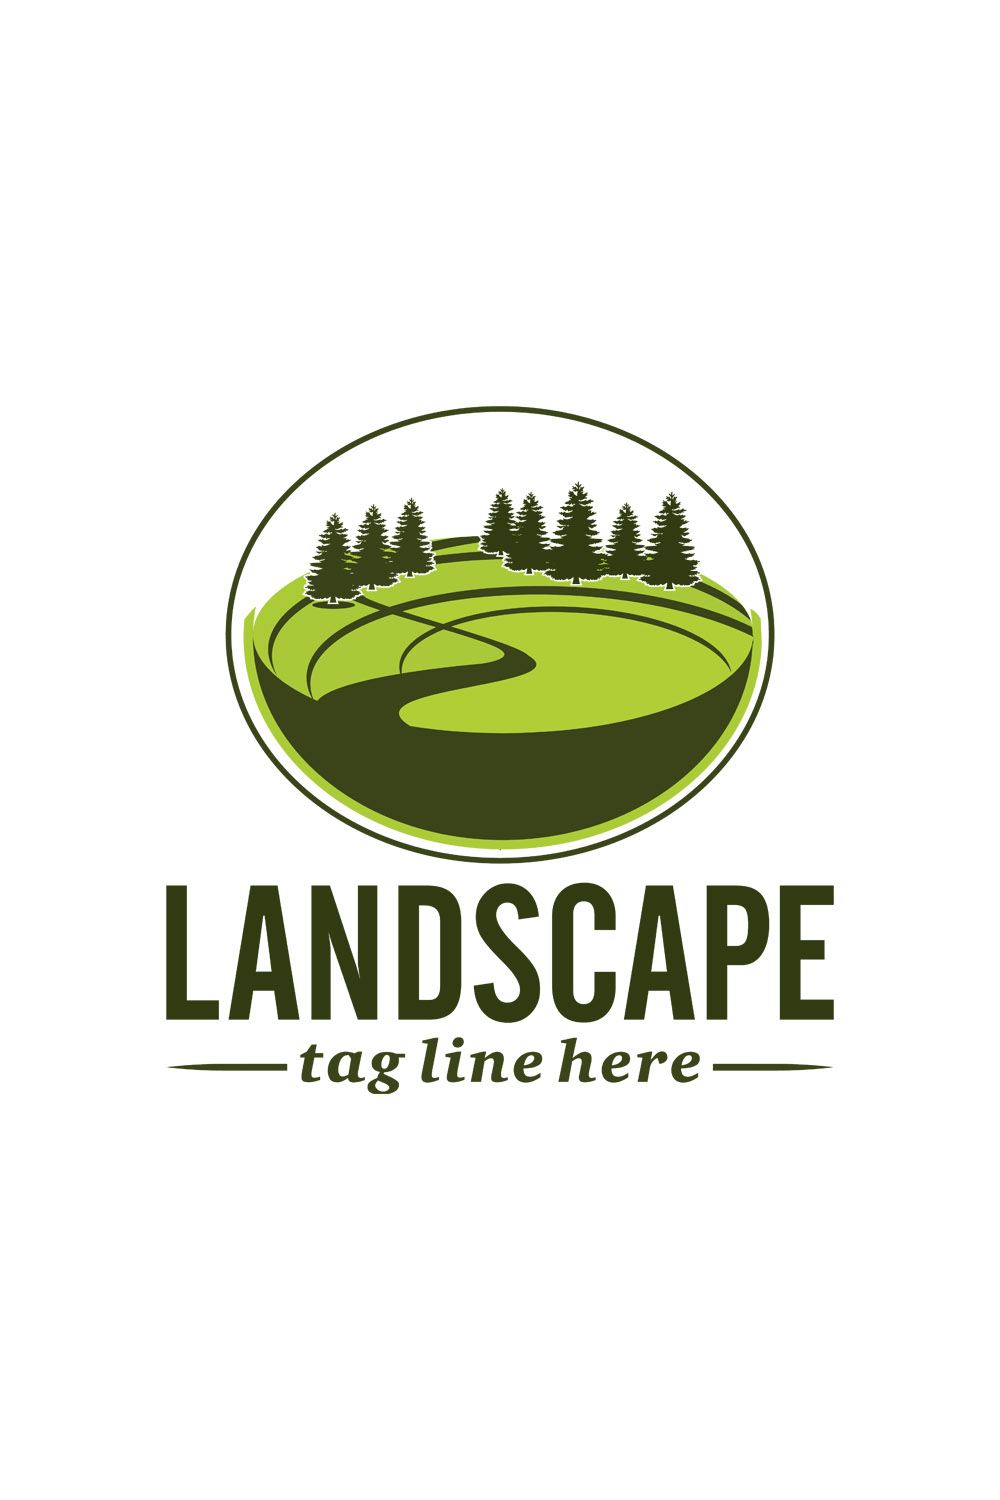 Elegant landscaping logo Design for your business pinterest preview image.